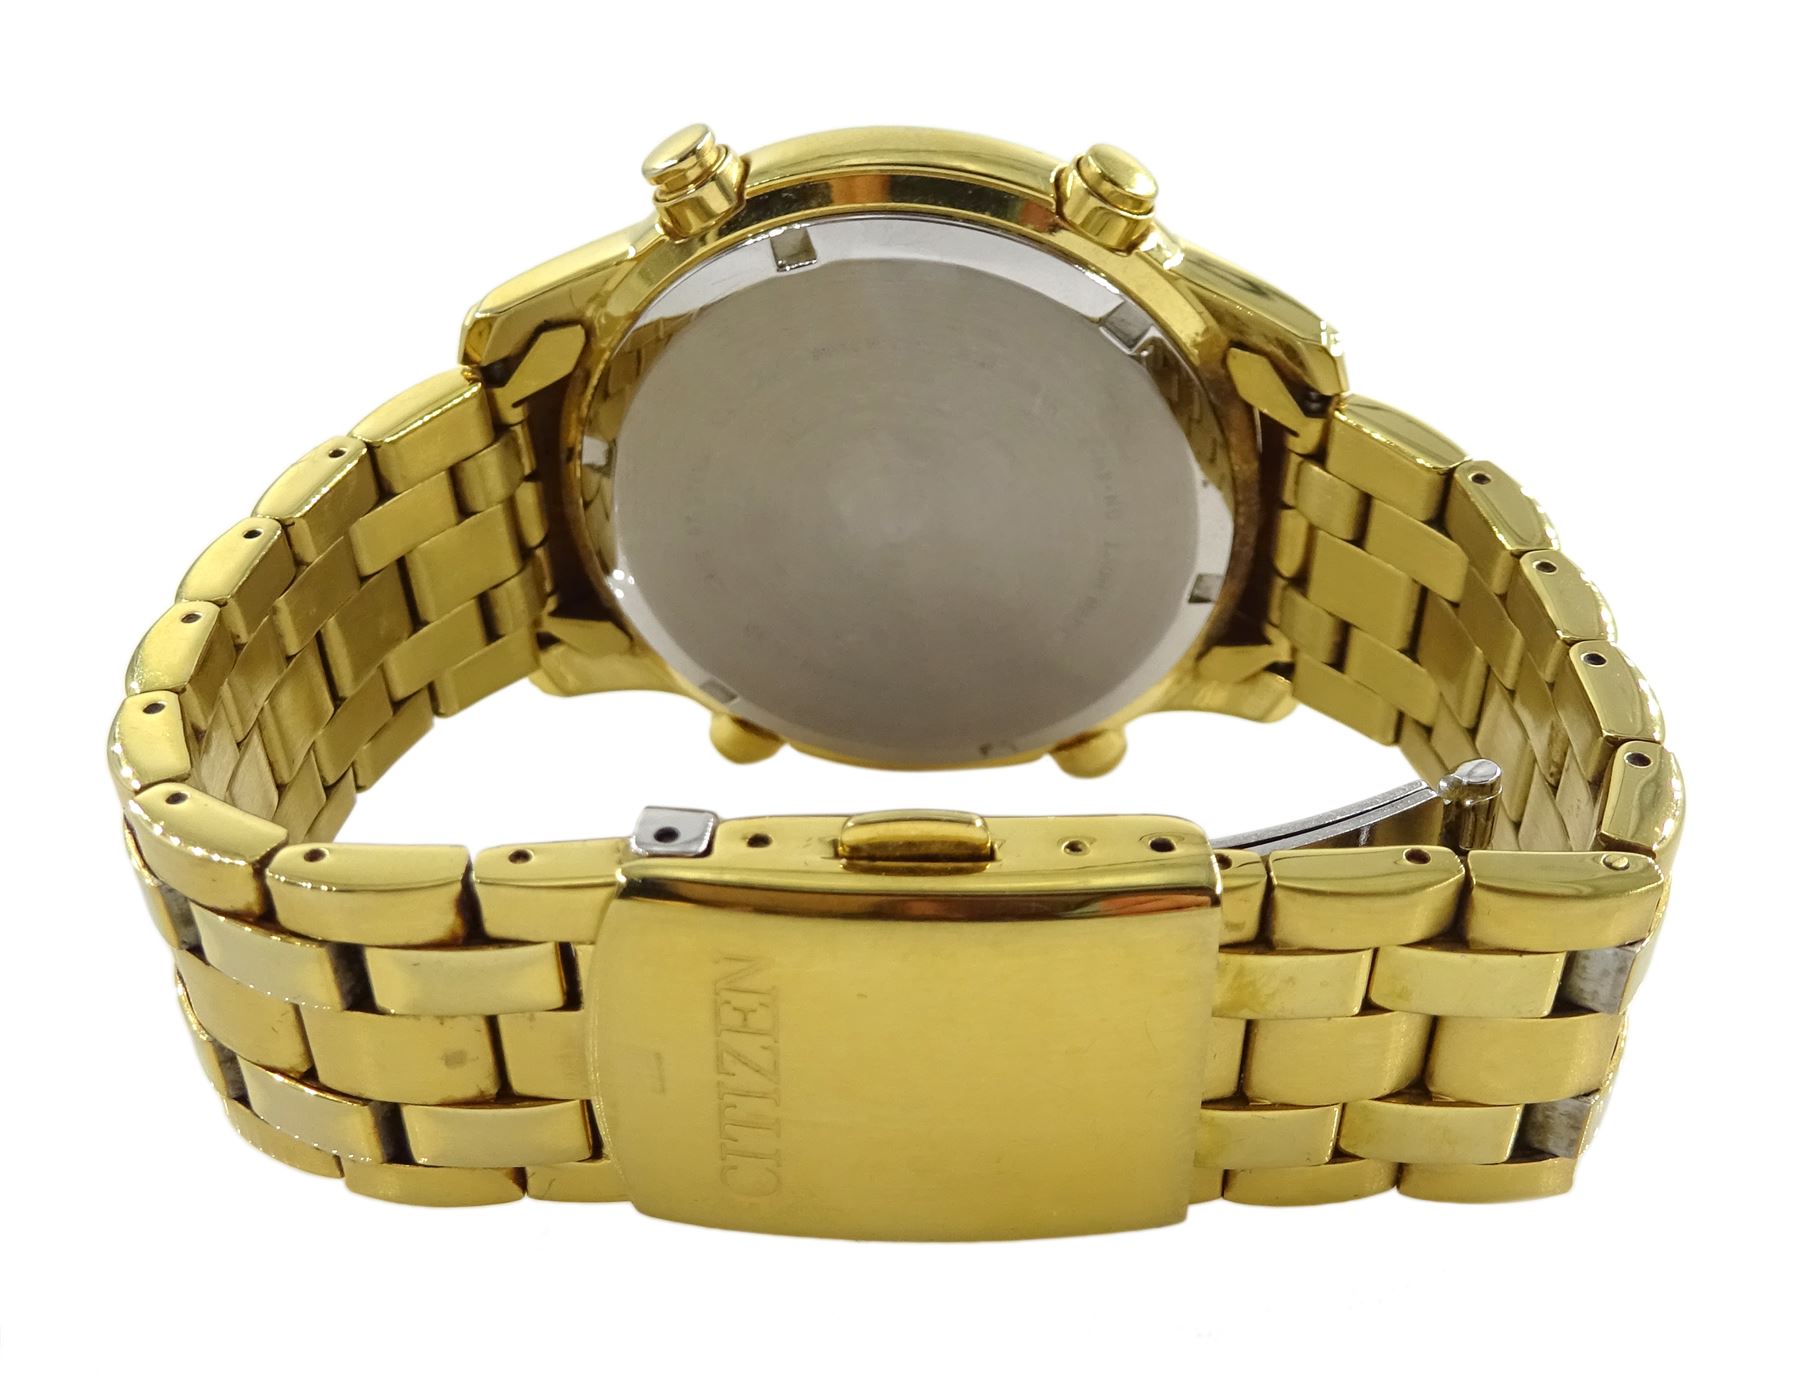 Citizen Alarm Chronograph gentleman's gold-plated bracelet wristwatch - Image 3 of 3